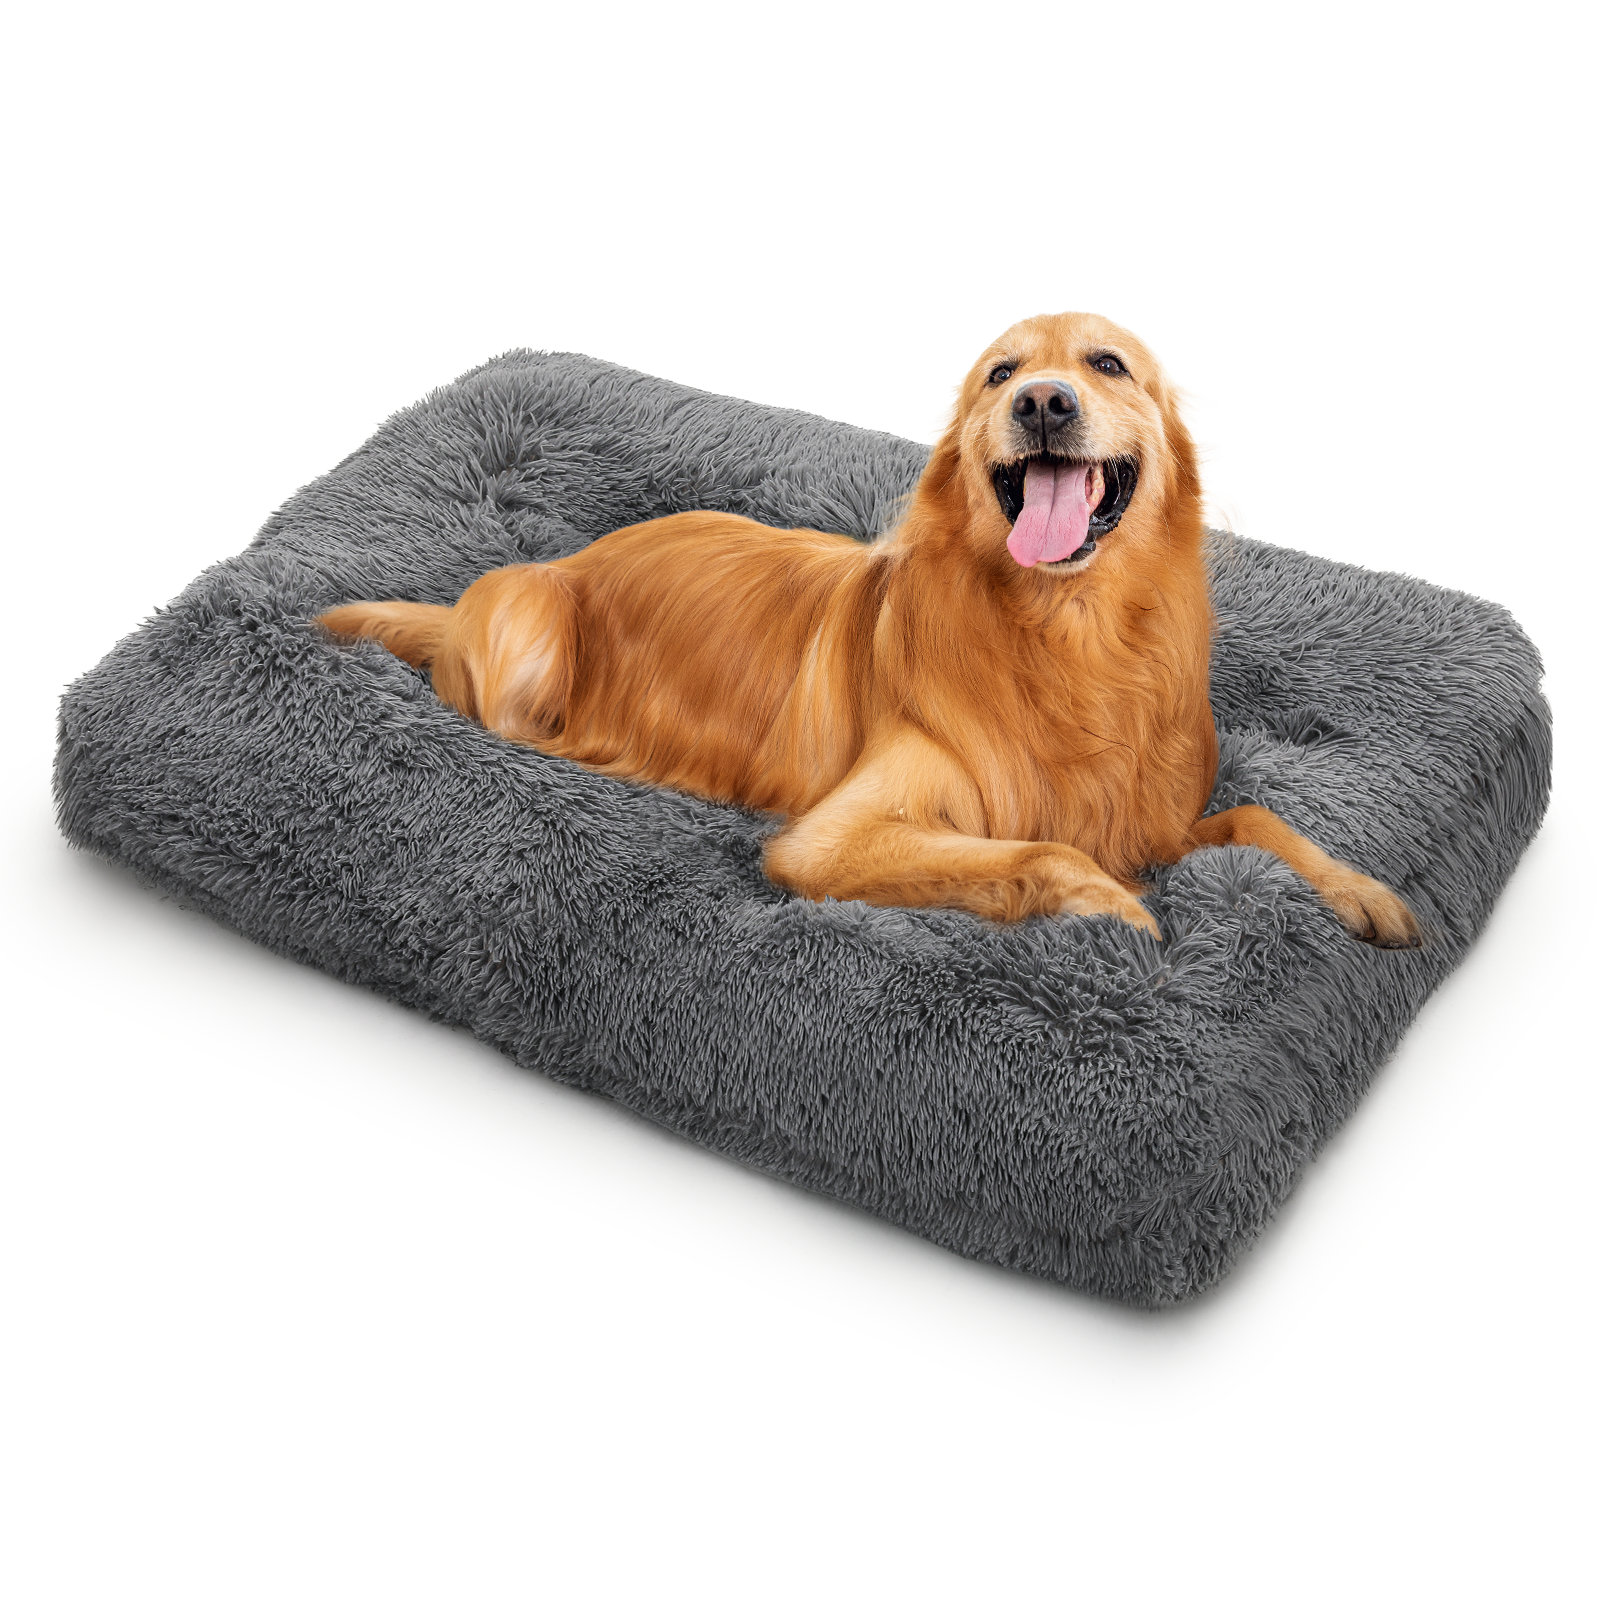 Shredded Memory Foam Fill Refill for Pillow, Bean Bag, Dog Pet Bed Cushion  5 lbs